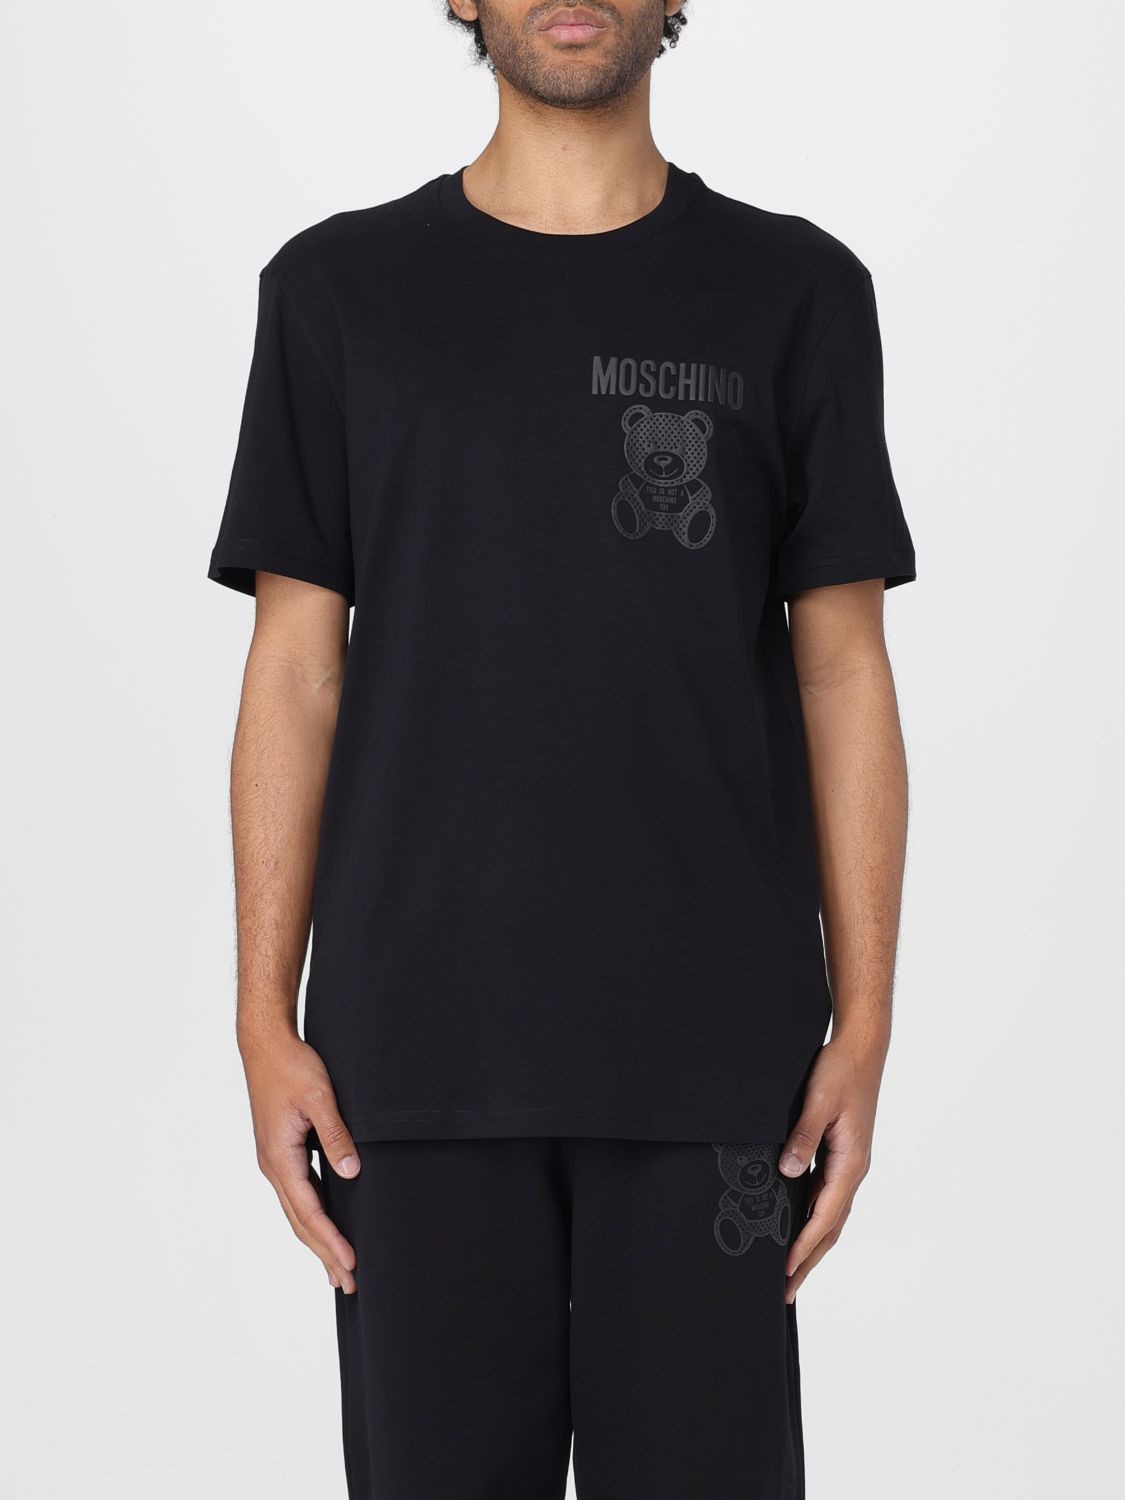 Shop Moschino Couture T-shirt  Men Color Black